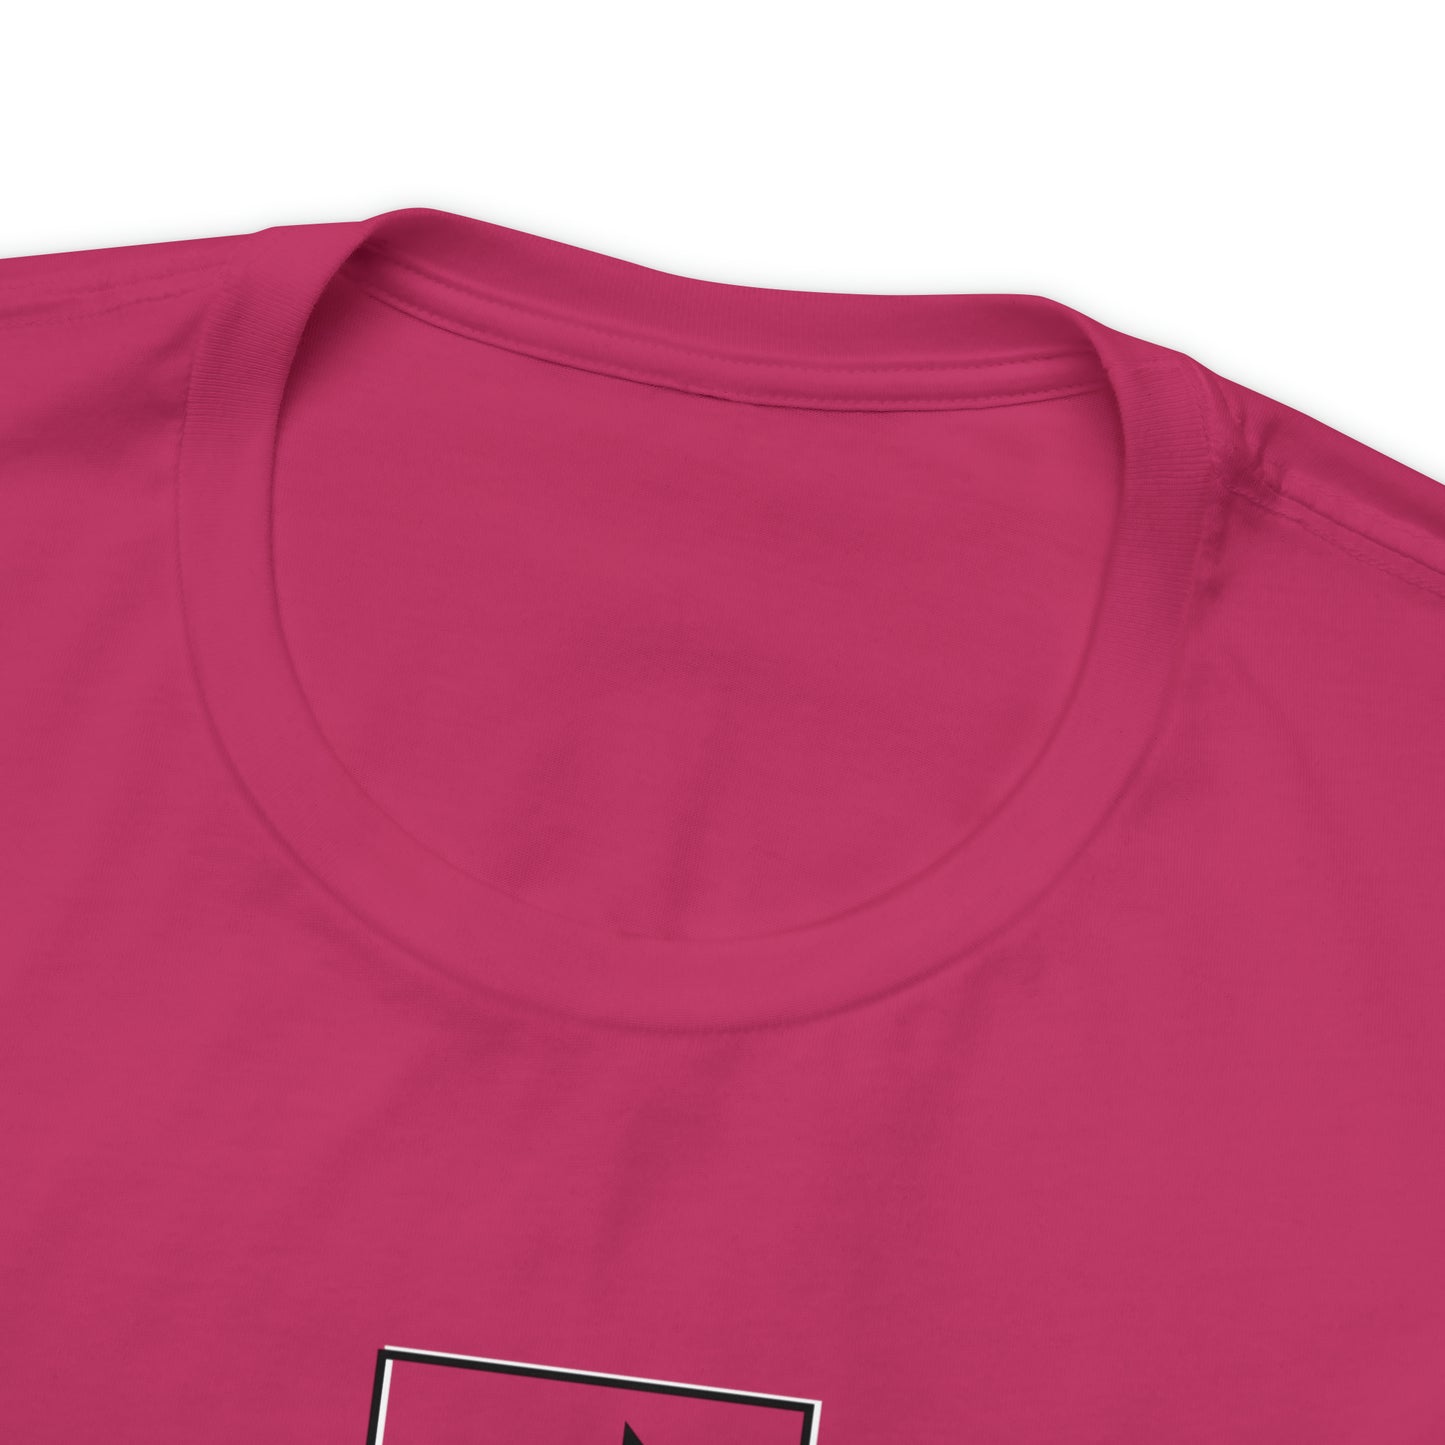 Grace Anthony Brand Logo Shirt, Name Brand Logo, Vintage Shirt for Men and Women, Teacher Nurse Gift, Gifts for Her, Journaling Notebook